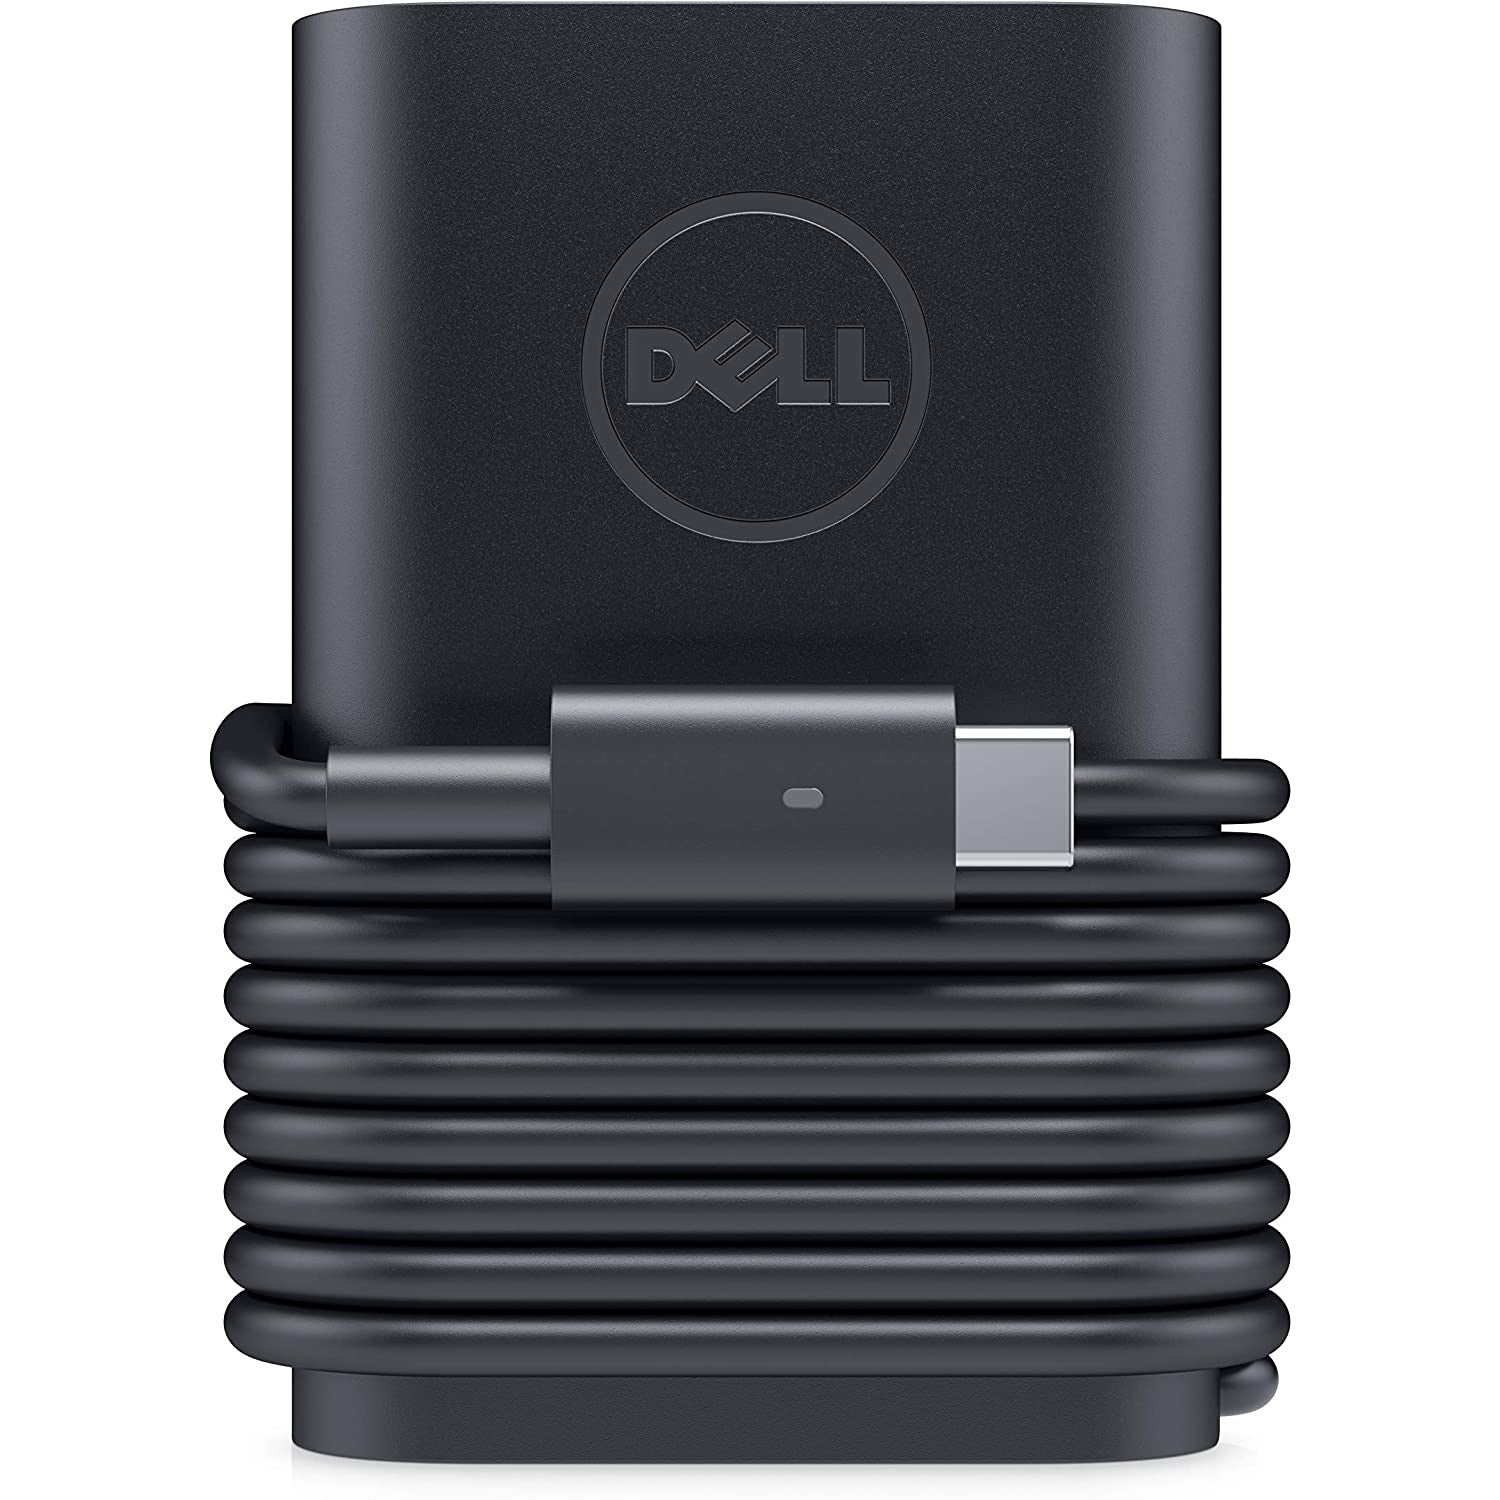 Discount PC - Dell 45Watt USB-C Power Adapter.